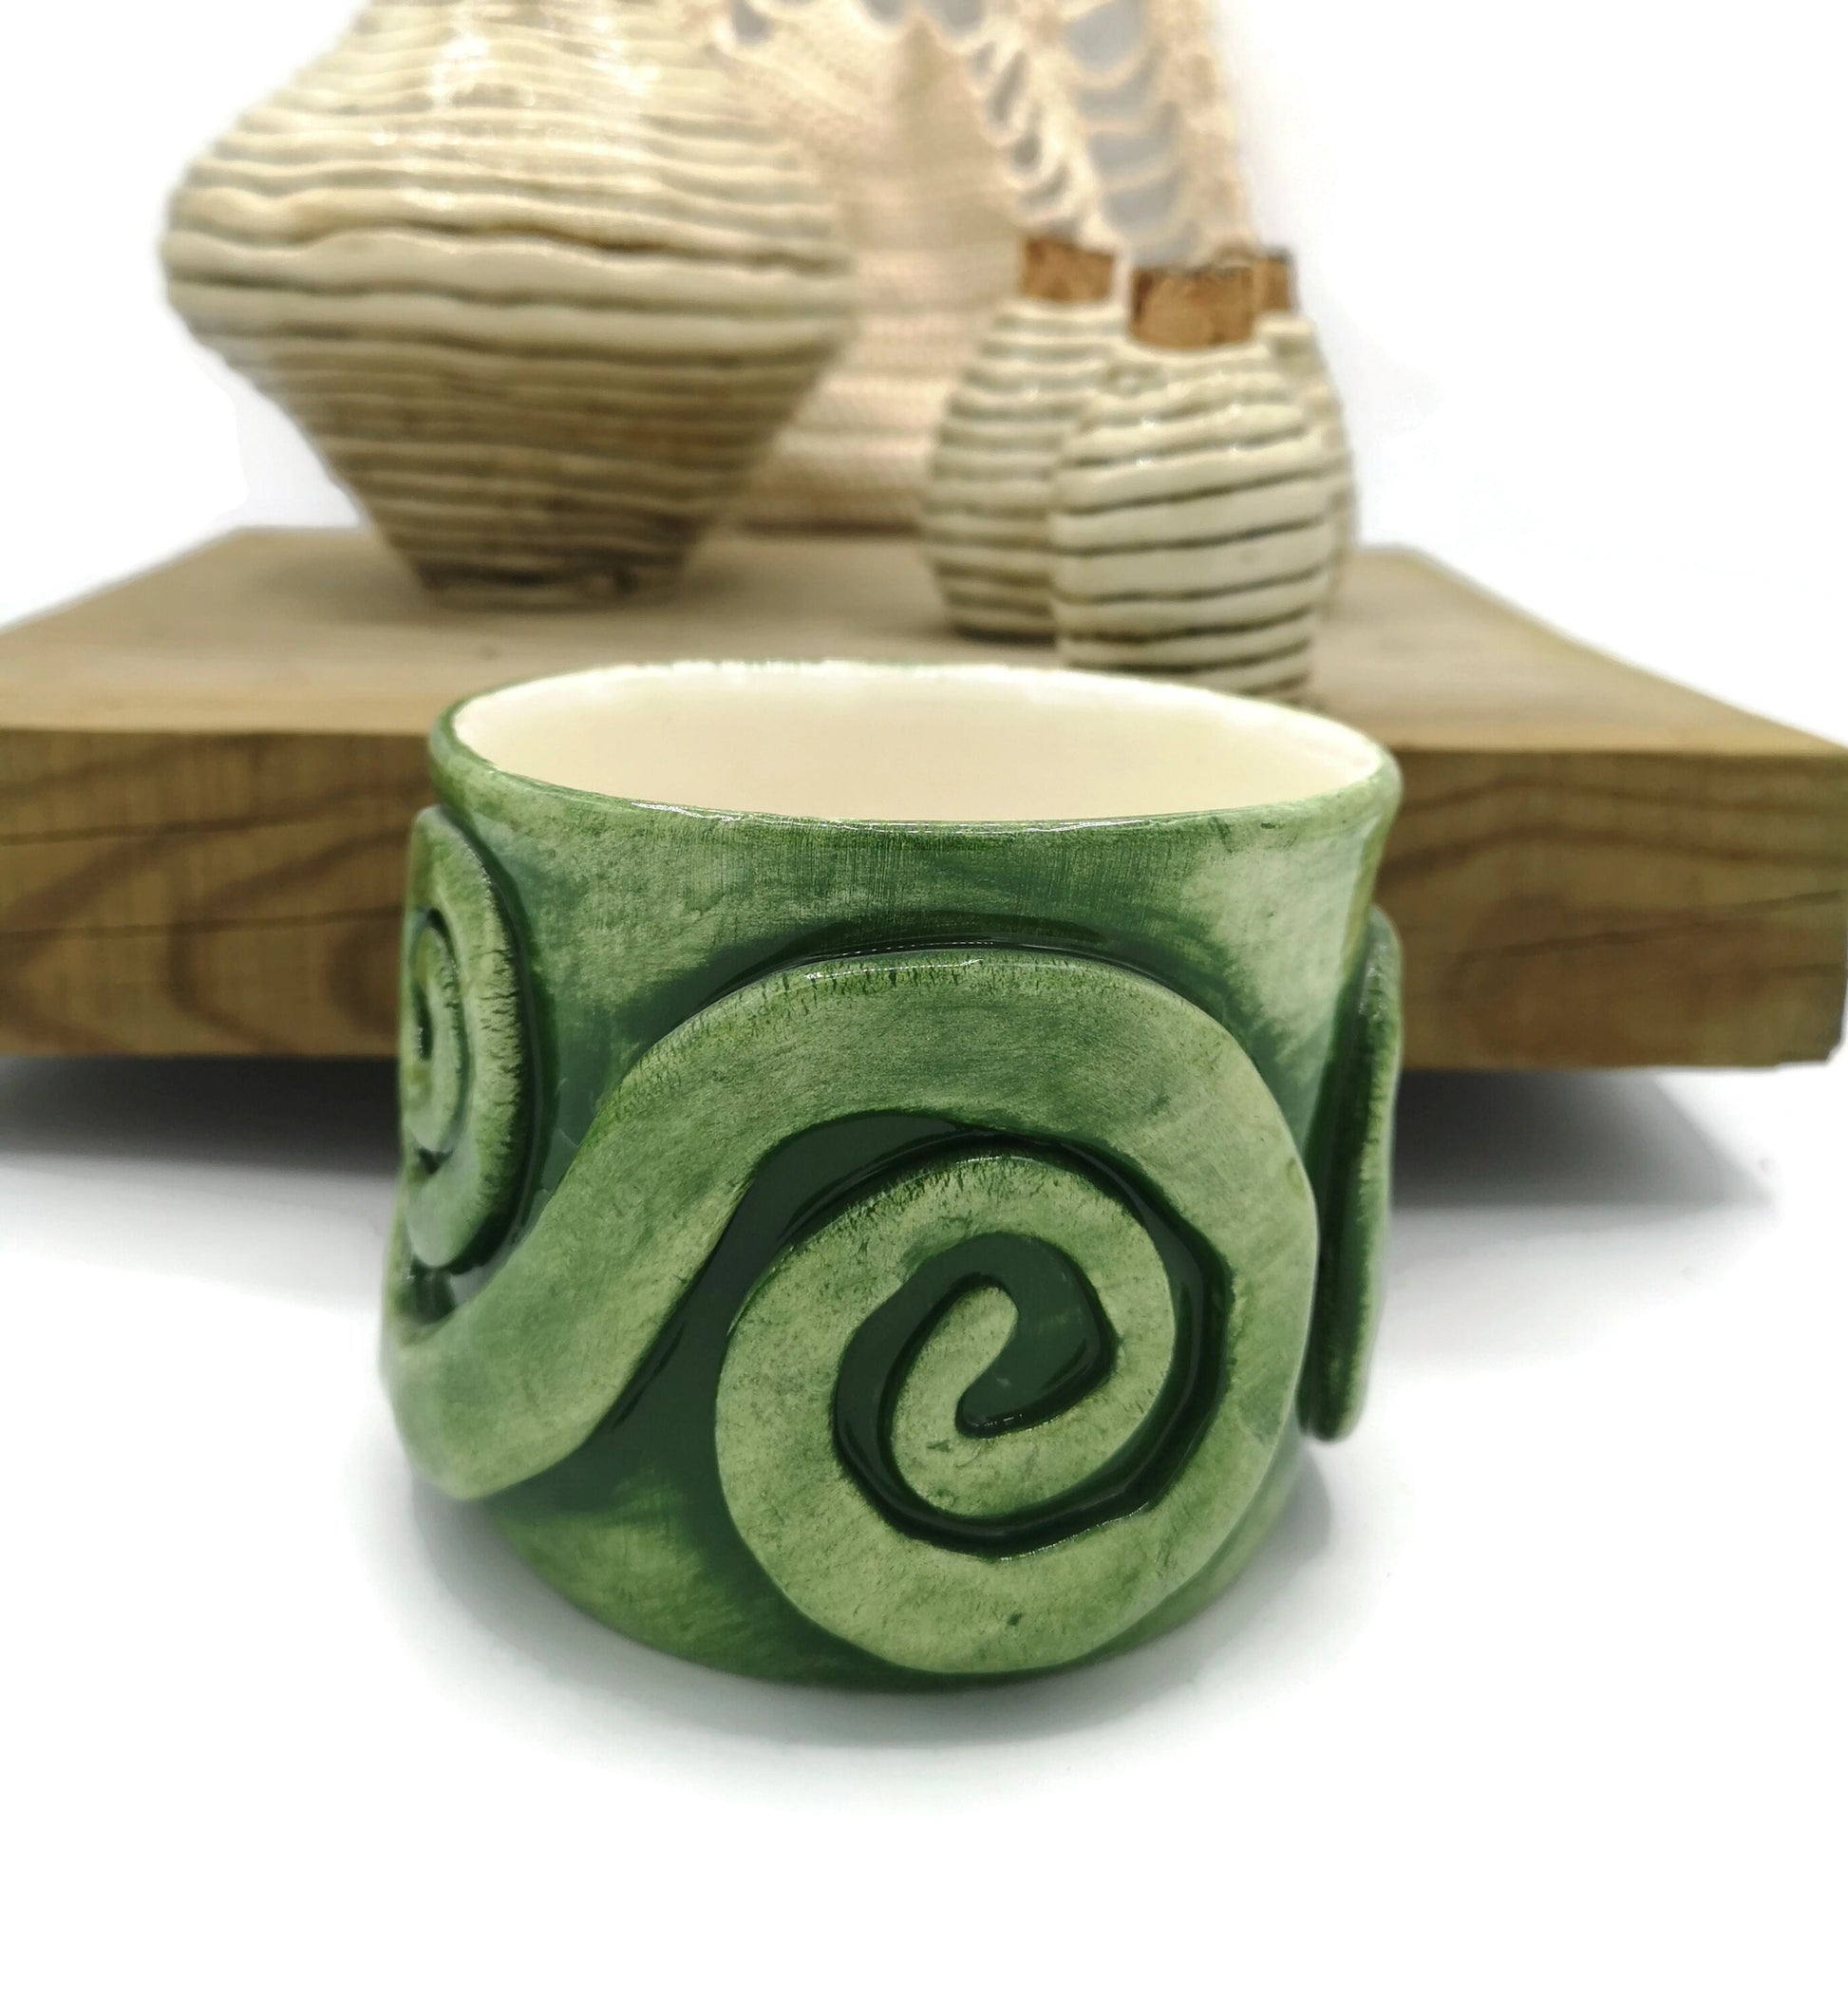 Handmade Ceramic Textured Green Vase For Home Decor, Pottery Succulent Planter Pot, Sculptural Utensil Holder, Mothers Day Gift For Grandma - Ceramica Ana Rafael